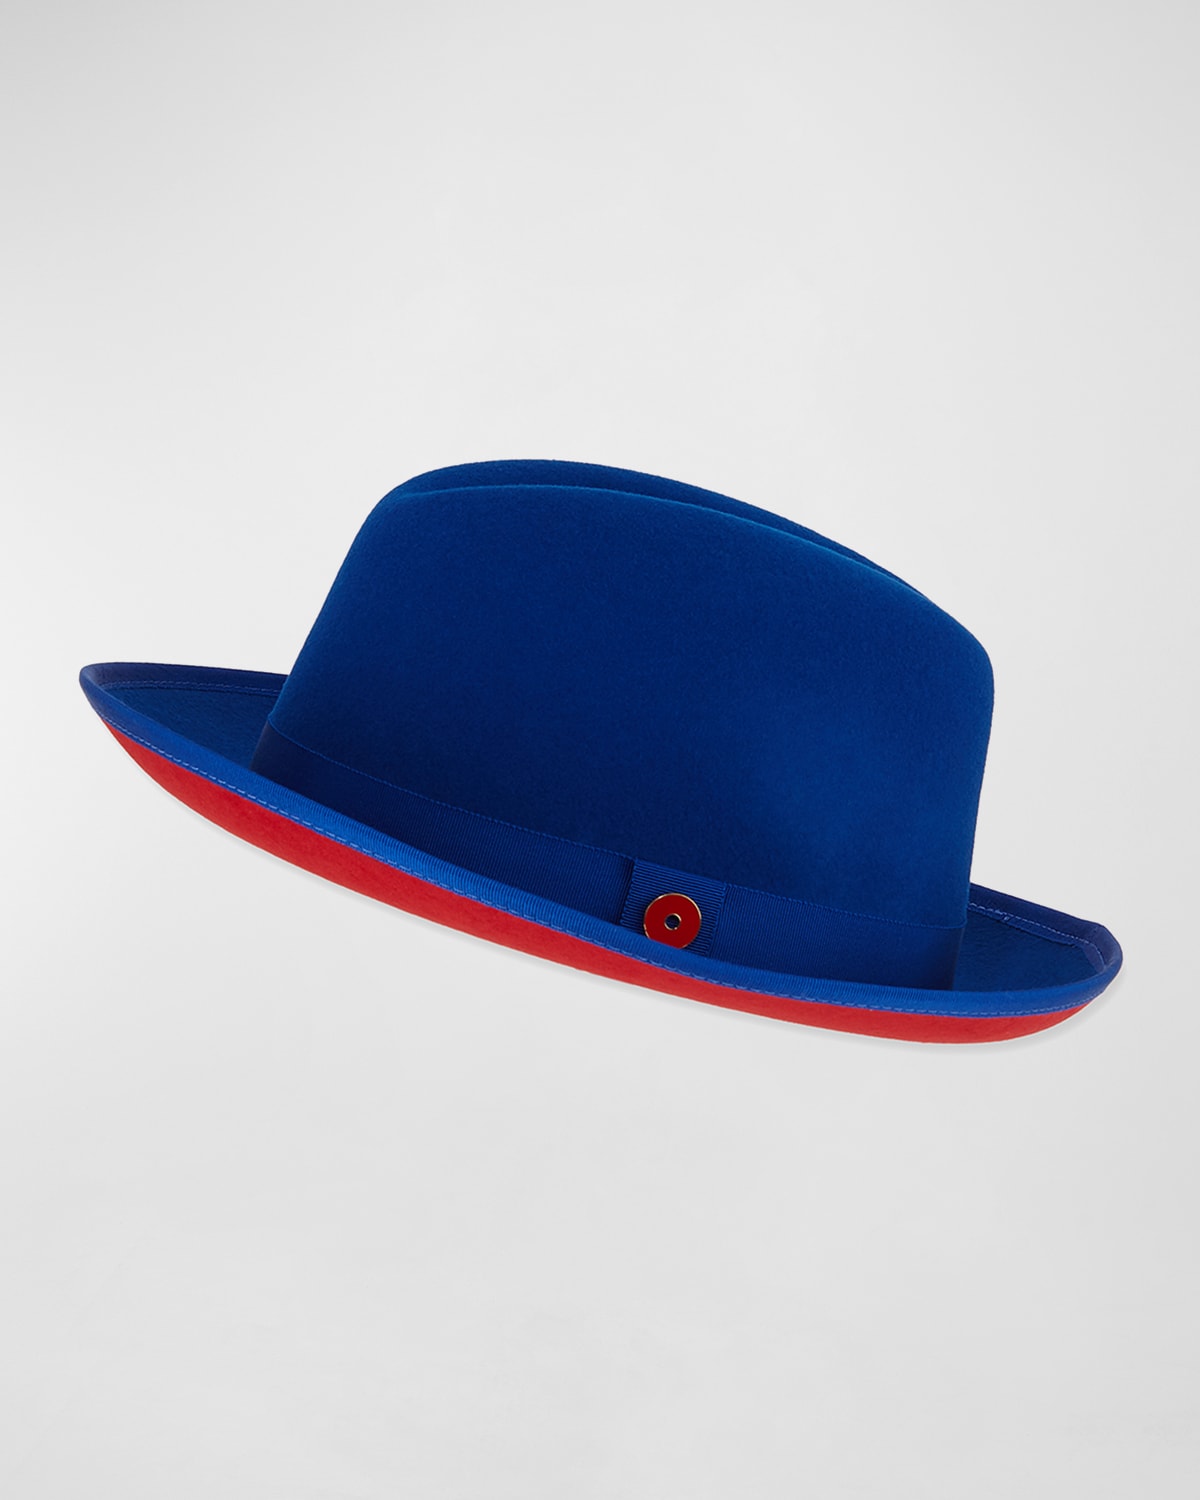 Keith James King Red-Brim Wool Fedora Hat, True Blue